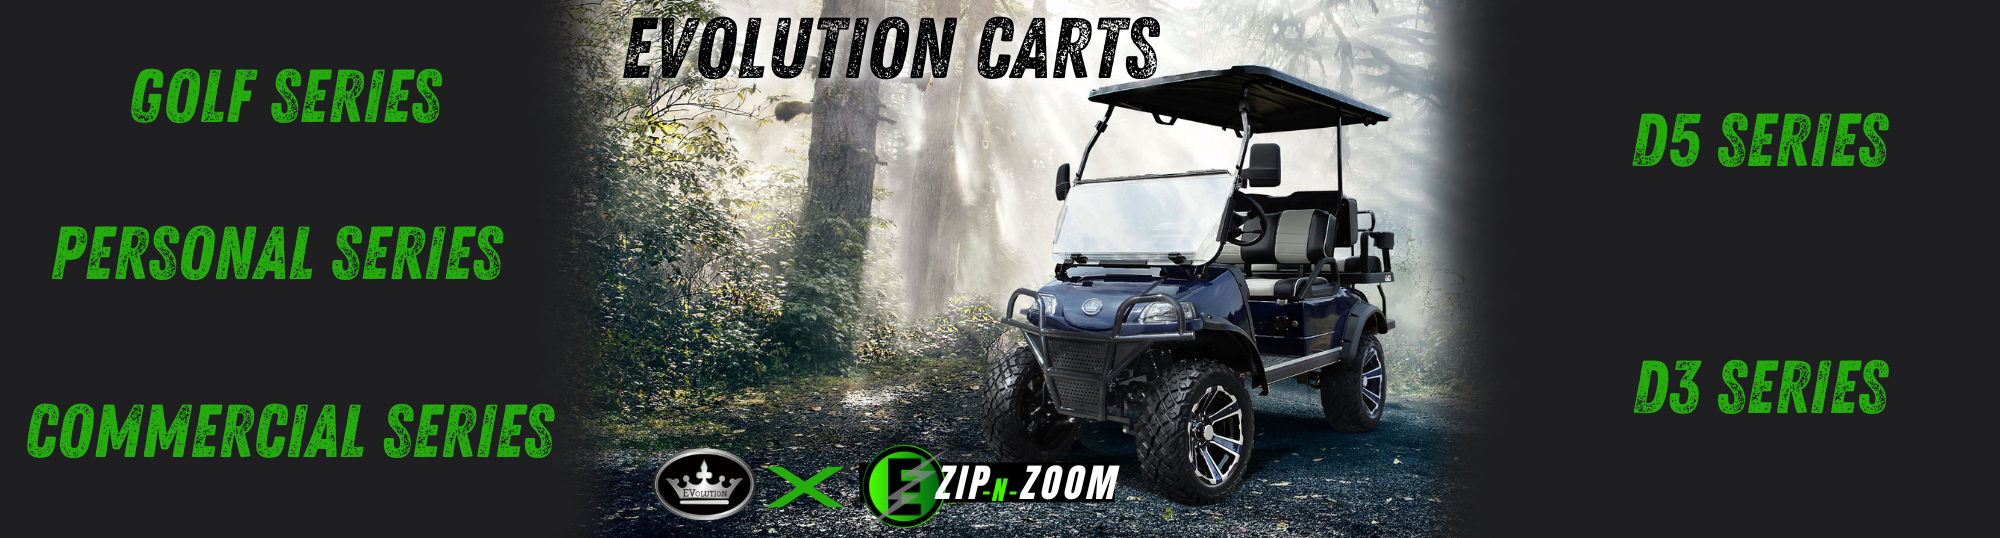 Evolution_Golf_Carts